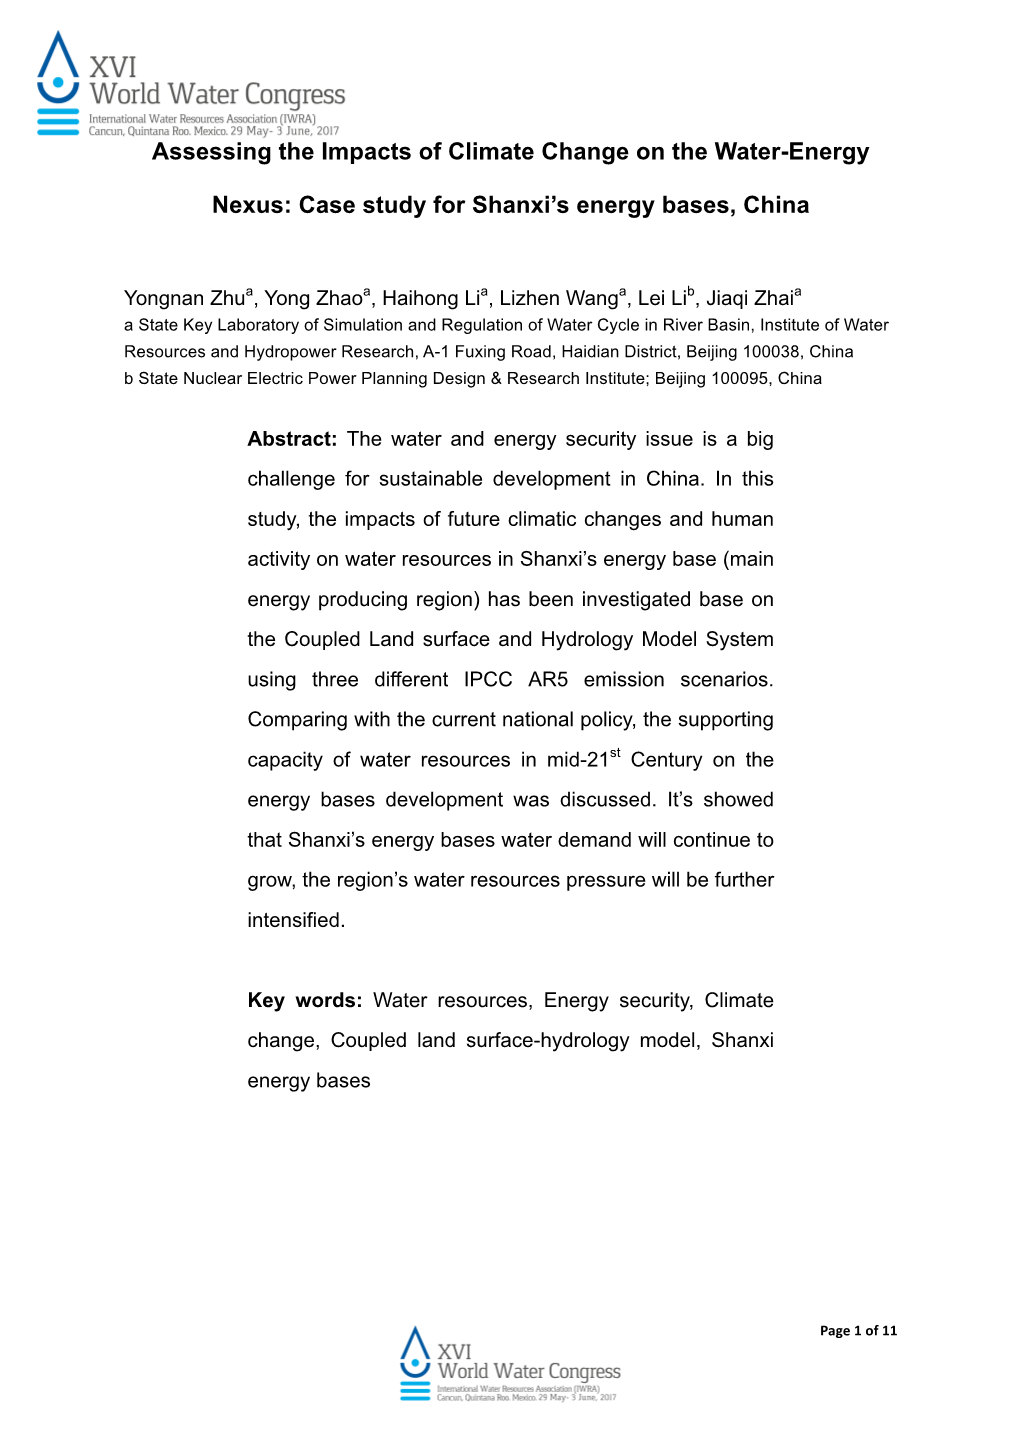 Case Study for Shanxi's Energy Bases, China